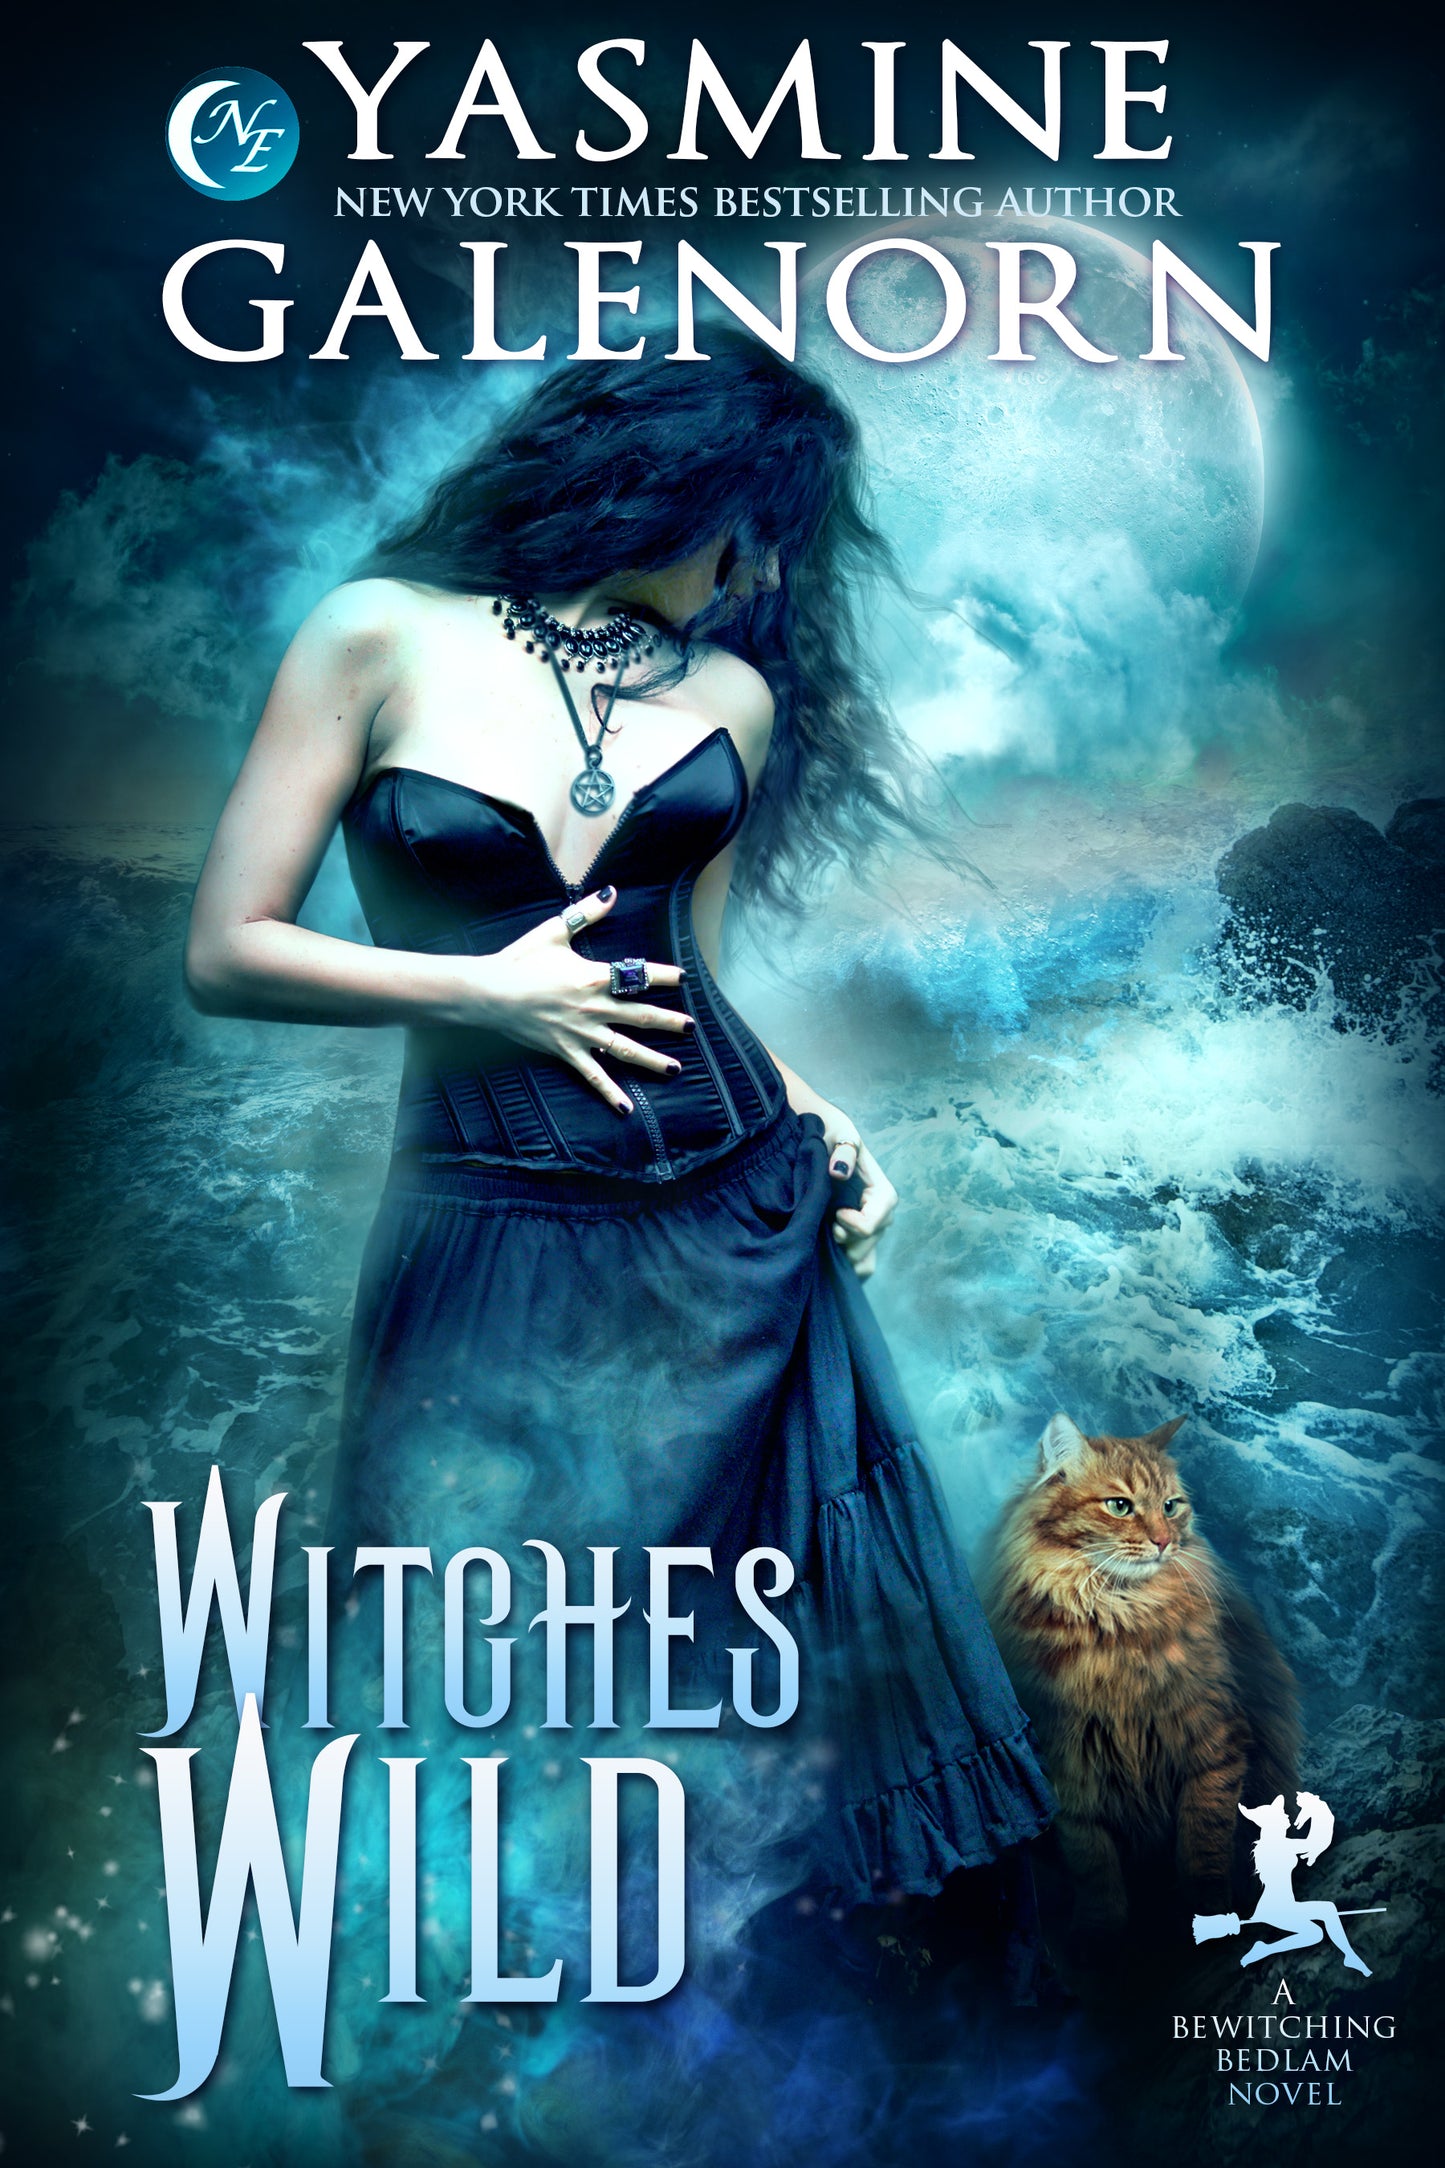 Witches Wild